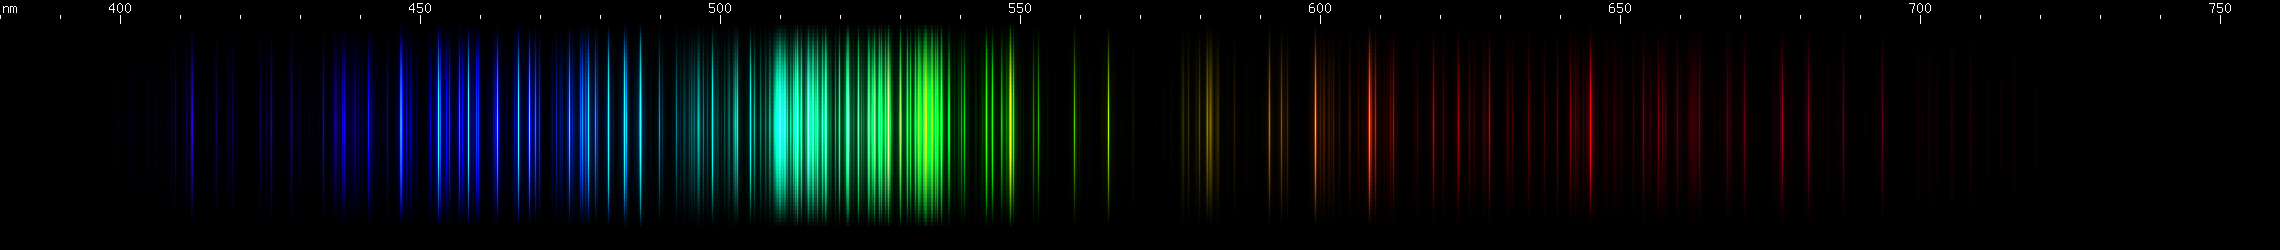 Spectral lines of Cobalt.